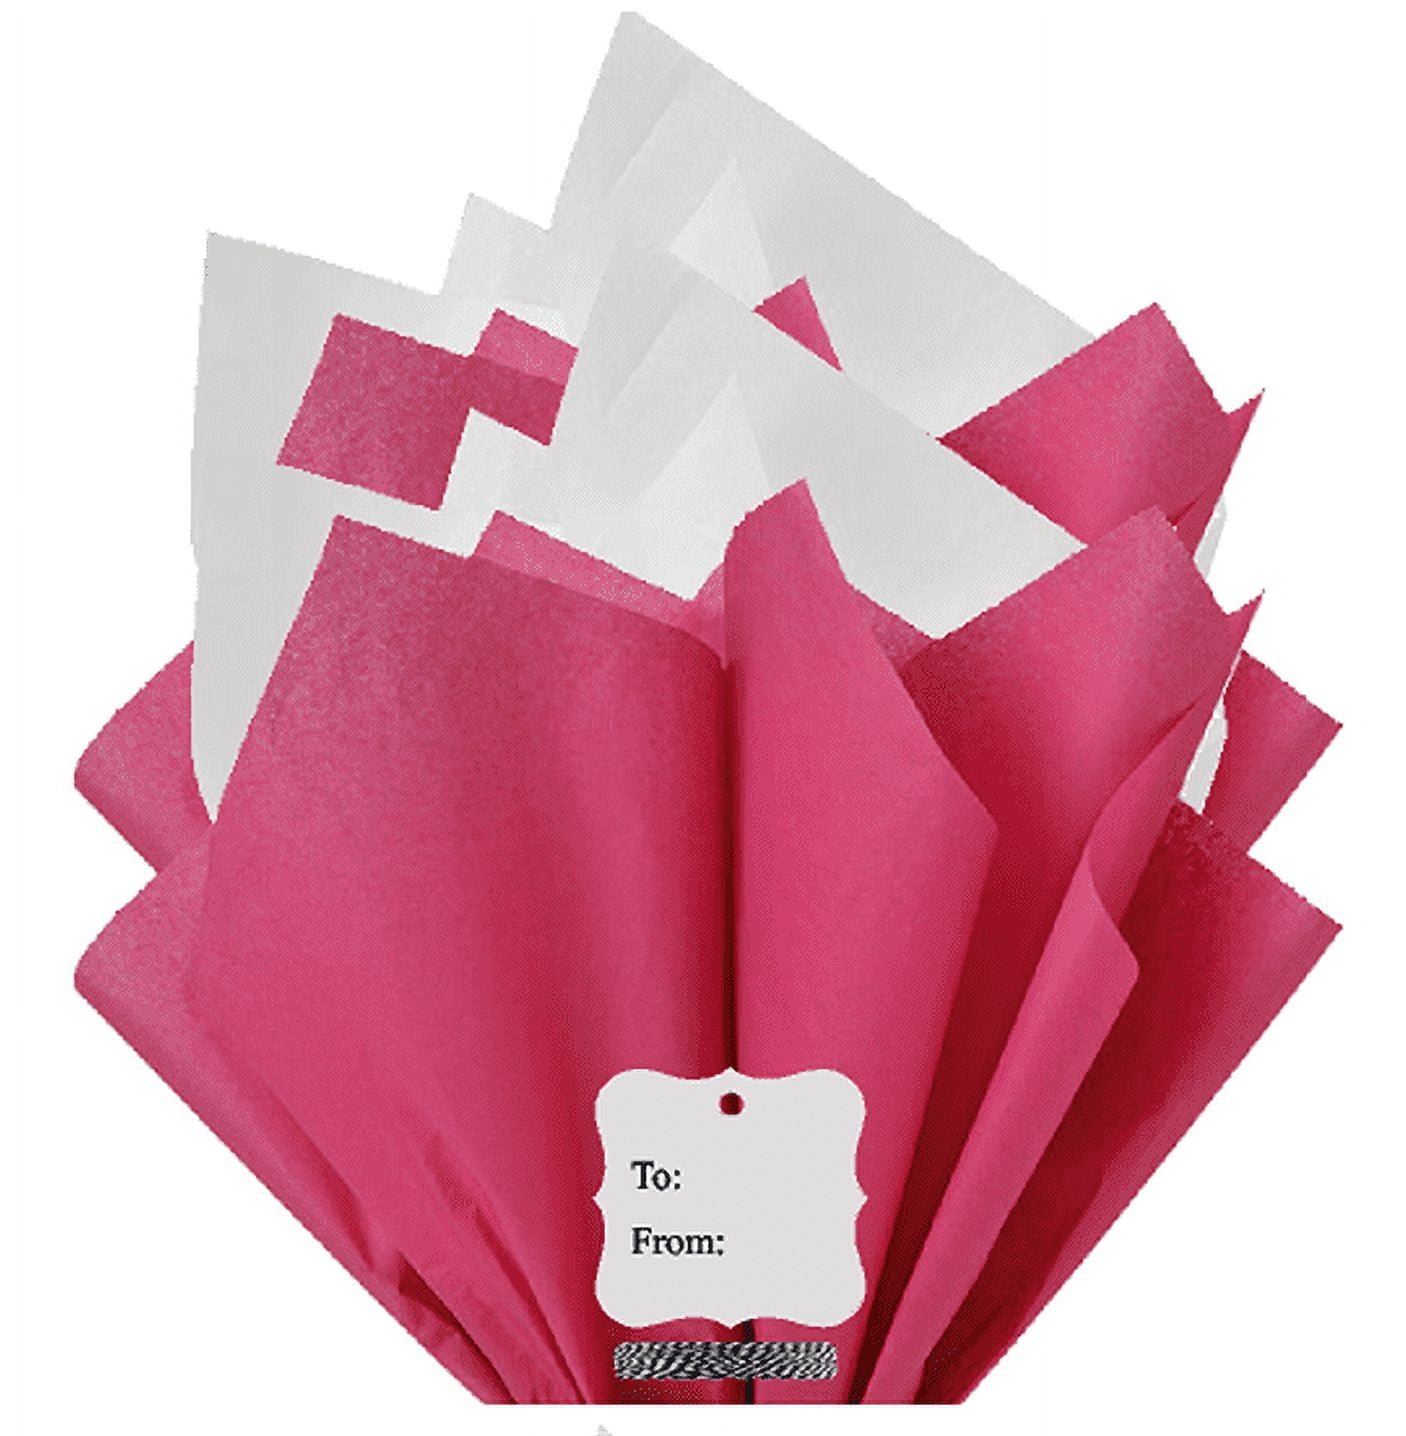 48 Large Blush Gift Wrap Pom Pom Tissue Paper 20x30, Pink